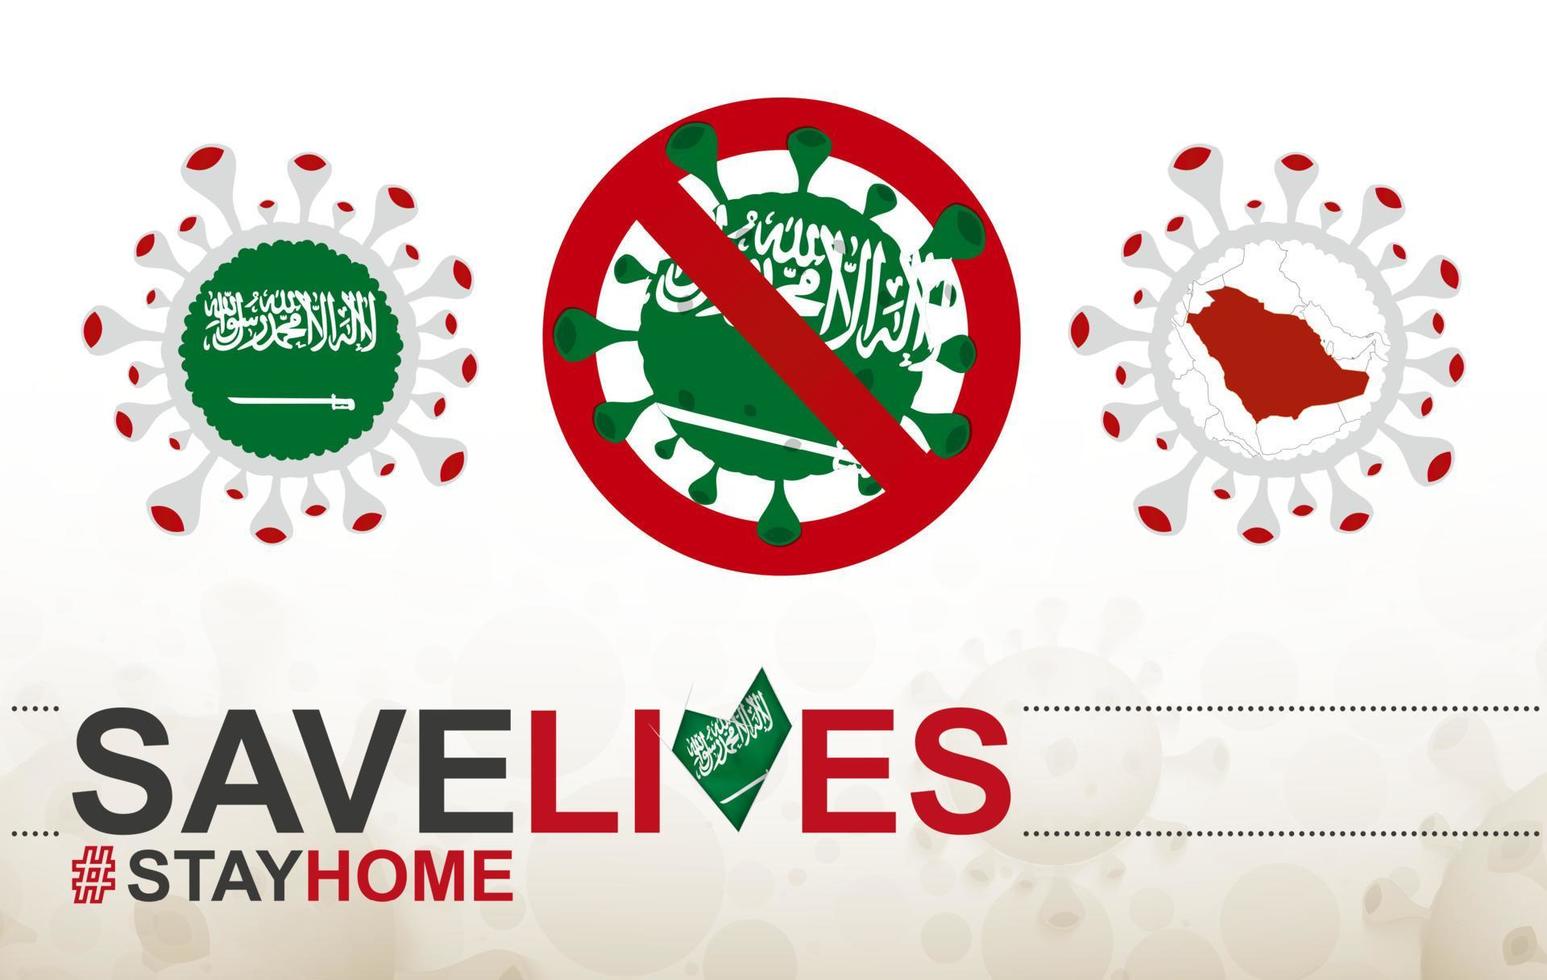 Coronavirus-Zelle mit saudi-arabischer Flagge und Karte. Stop-Covid-19-Schild, Slogan Save Lives Stay Home mit Flagge Saudi-Arabiens vektor